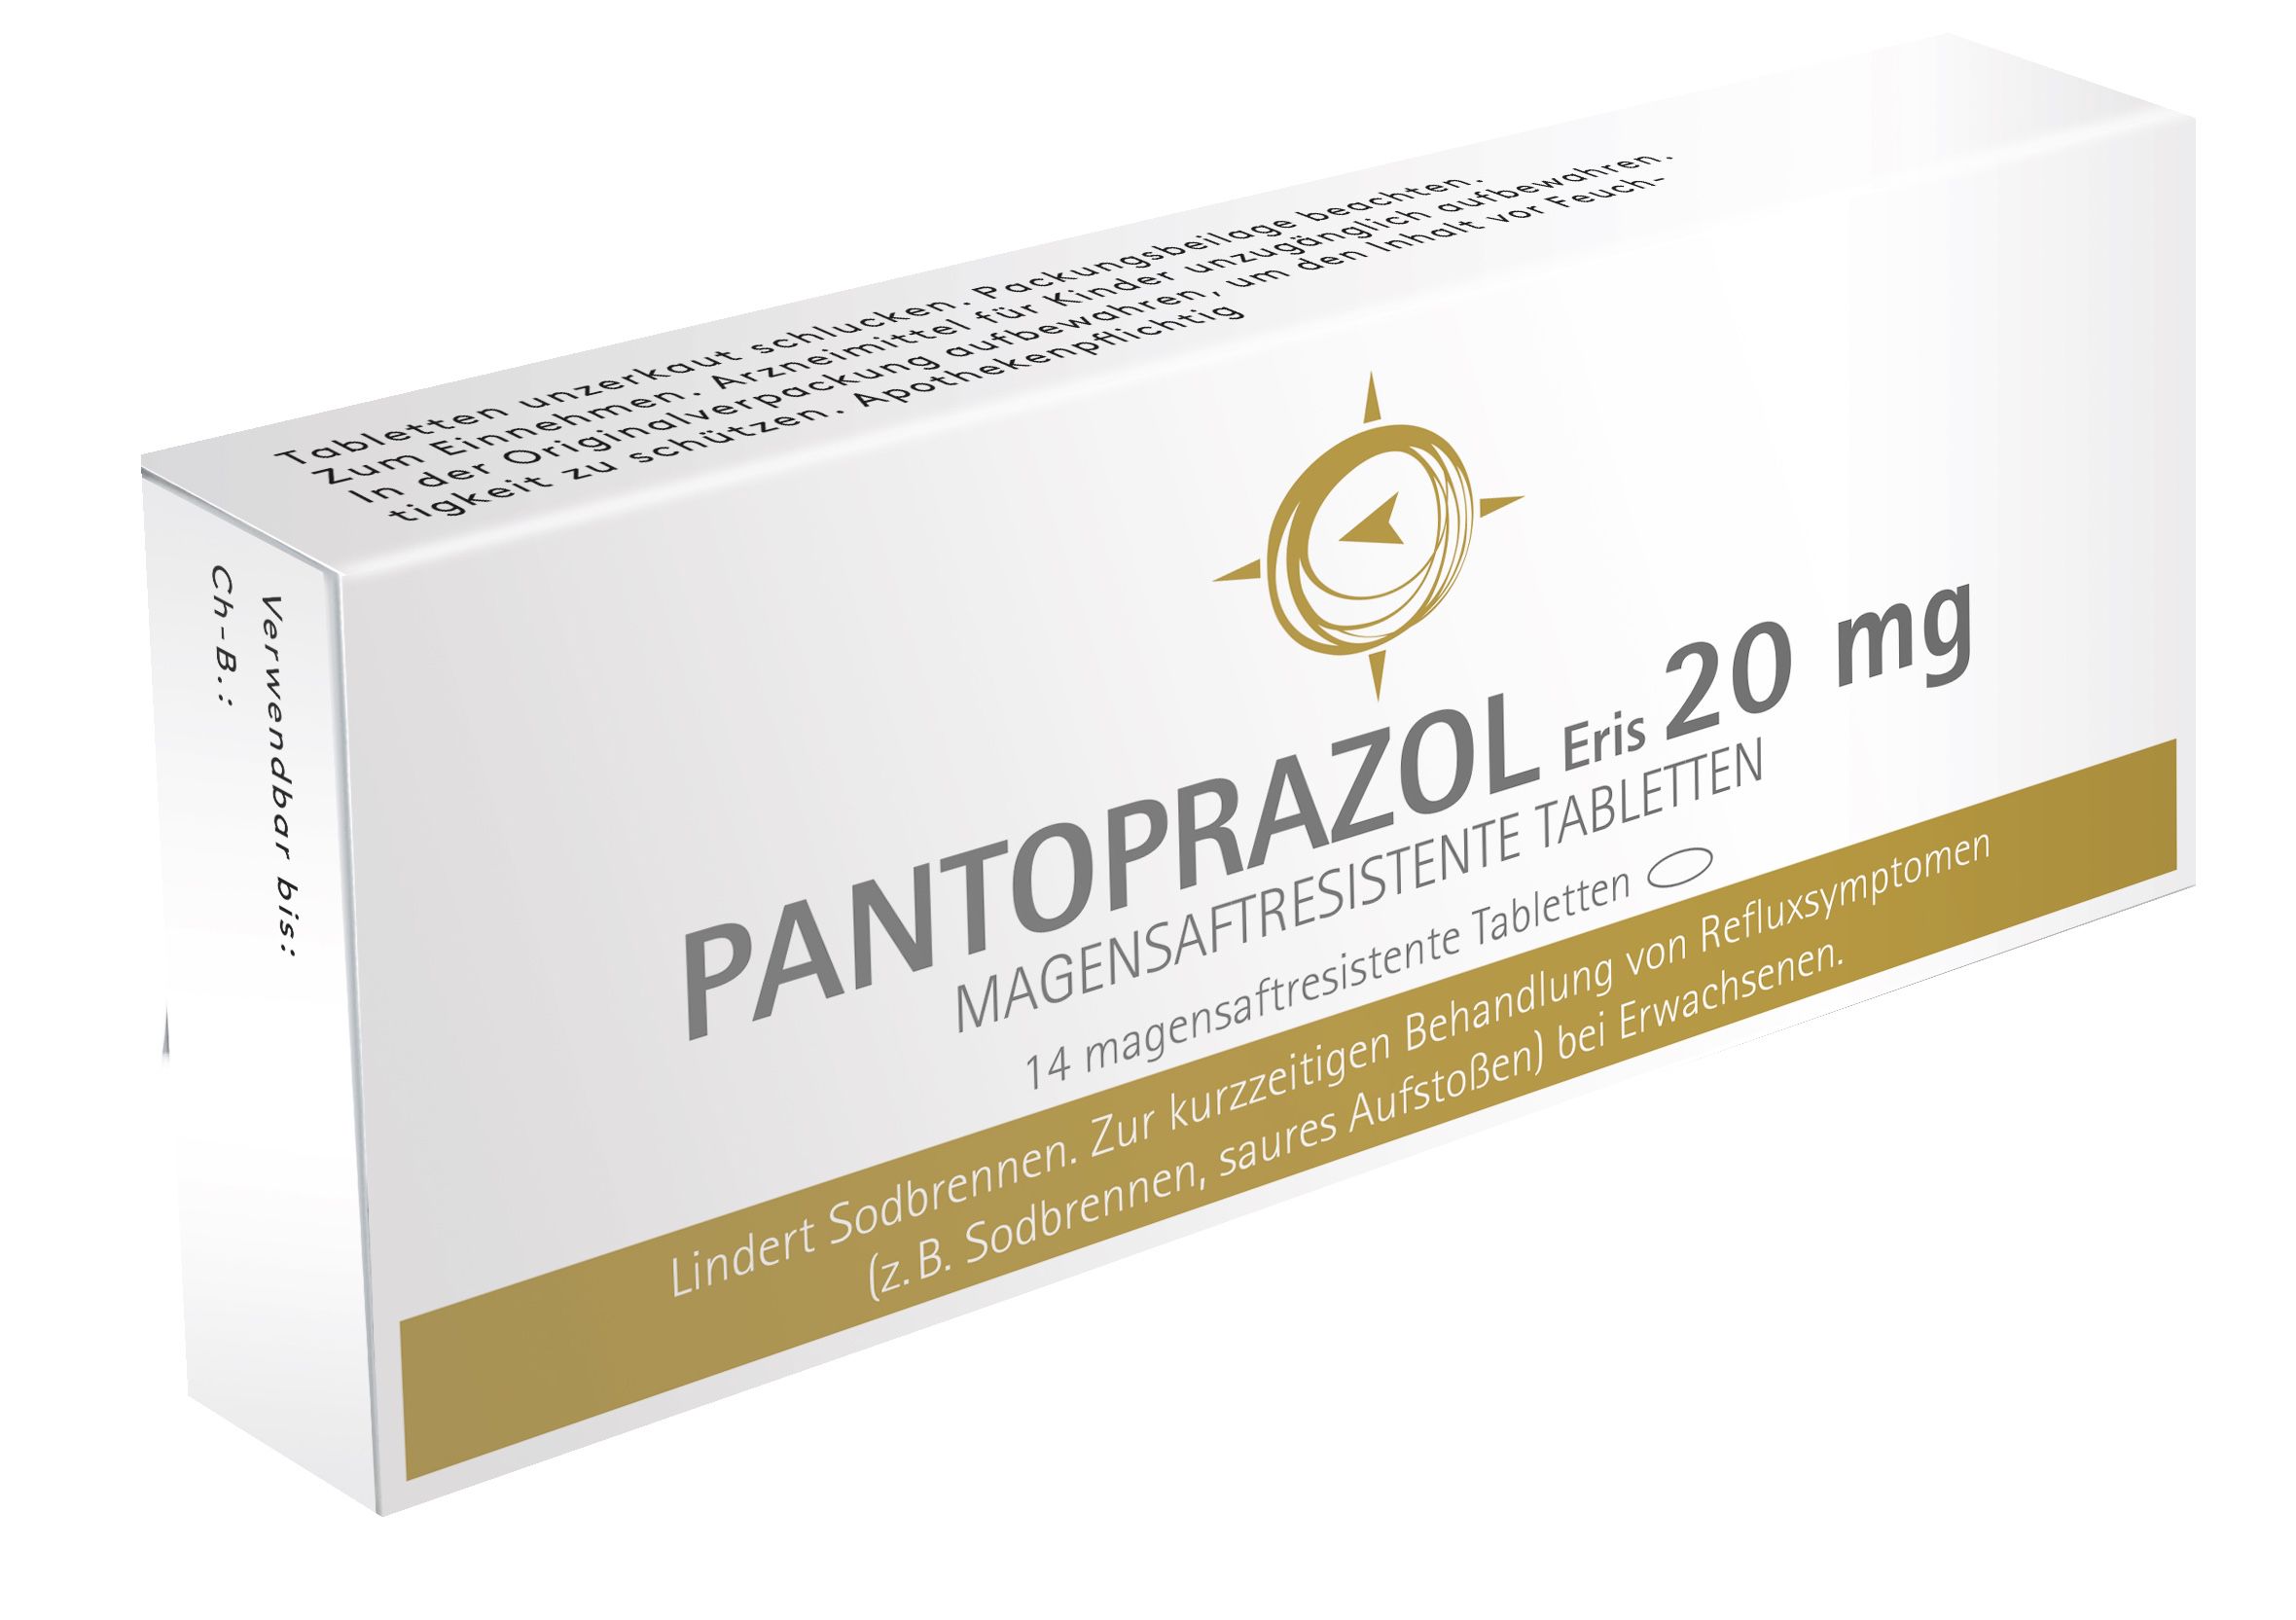 PANTOPRAZOL Eris 20 mg magensaftres.Tabletten WL